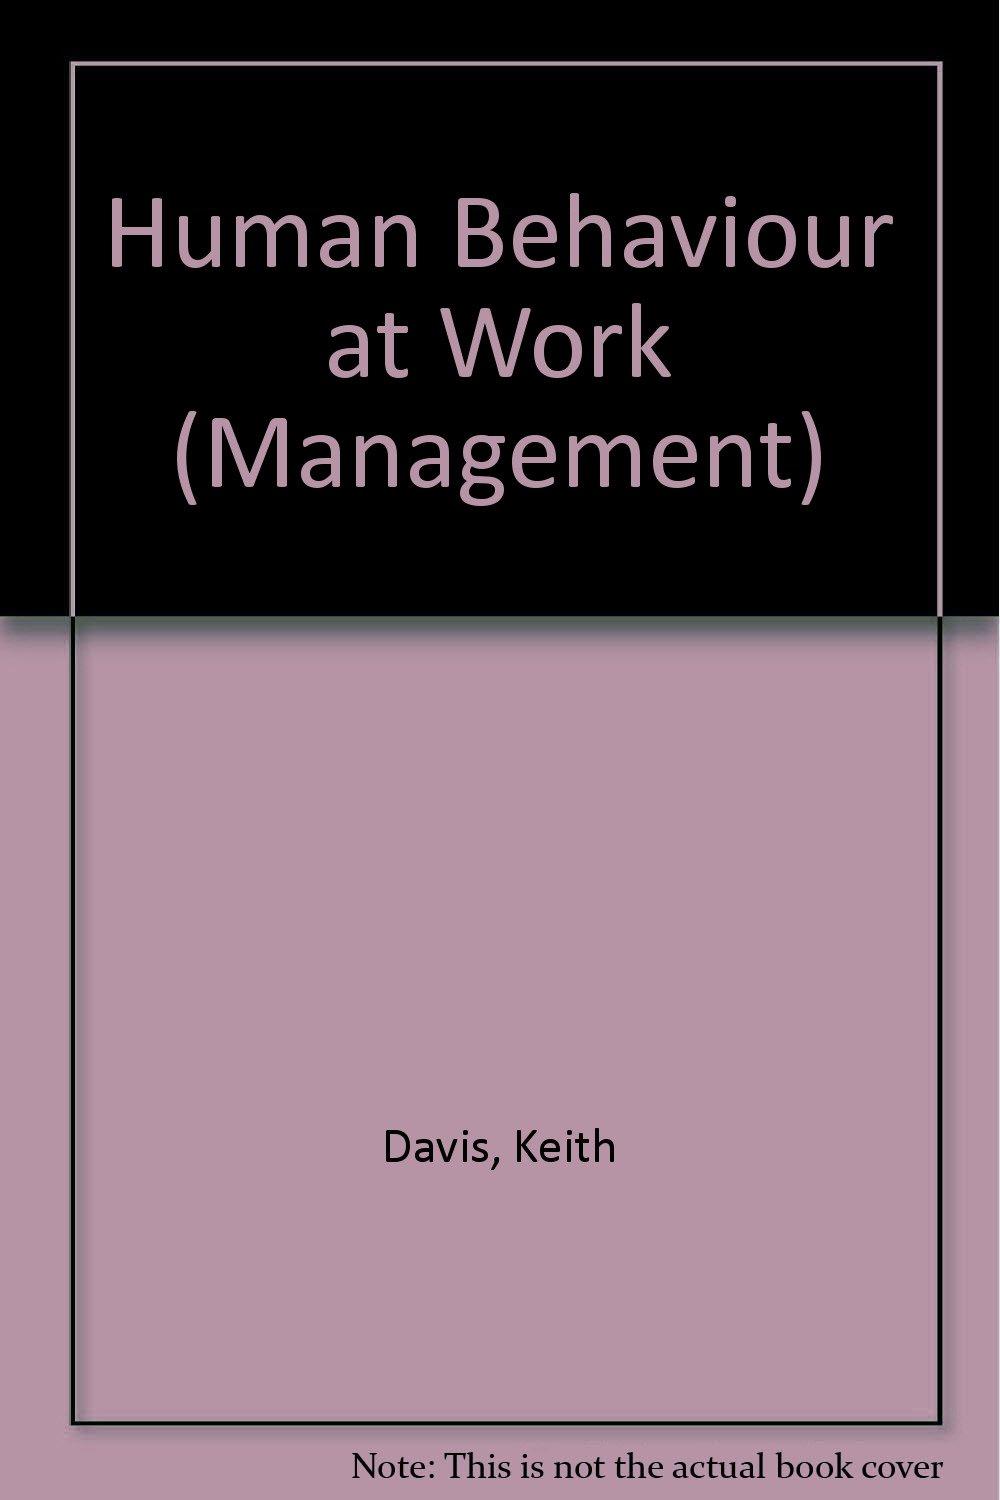 Human Behavior At Work Organizational Behavior